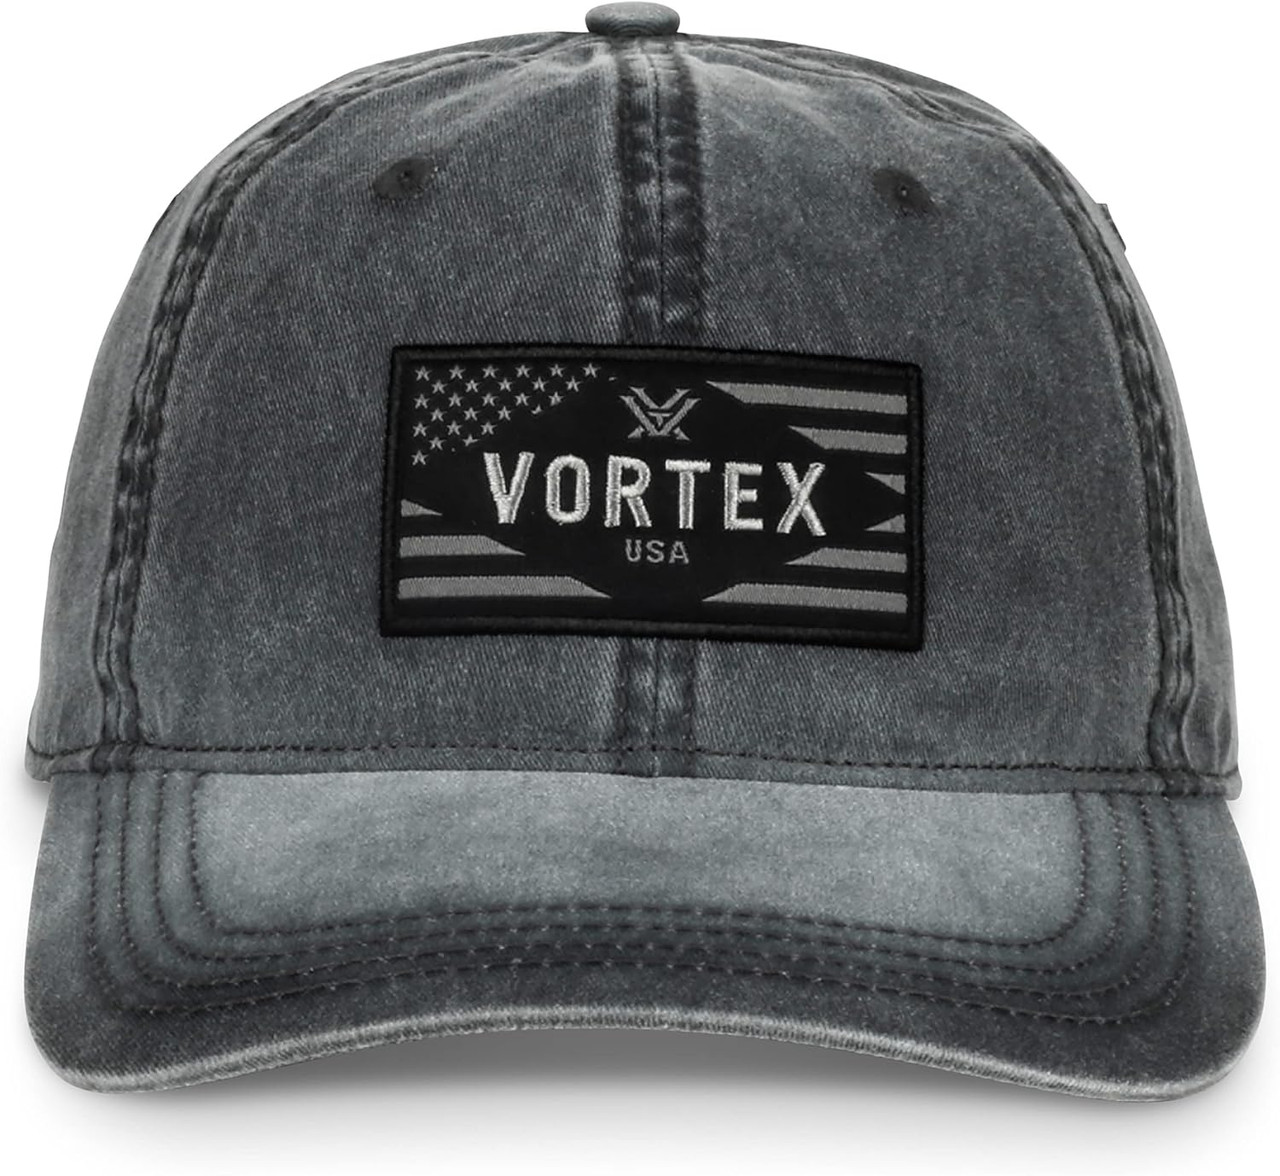 Vortex Optics Rank and File Twill Caps Buckle Closure - Black - OSFM